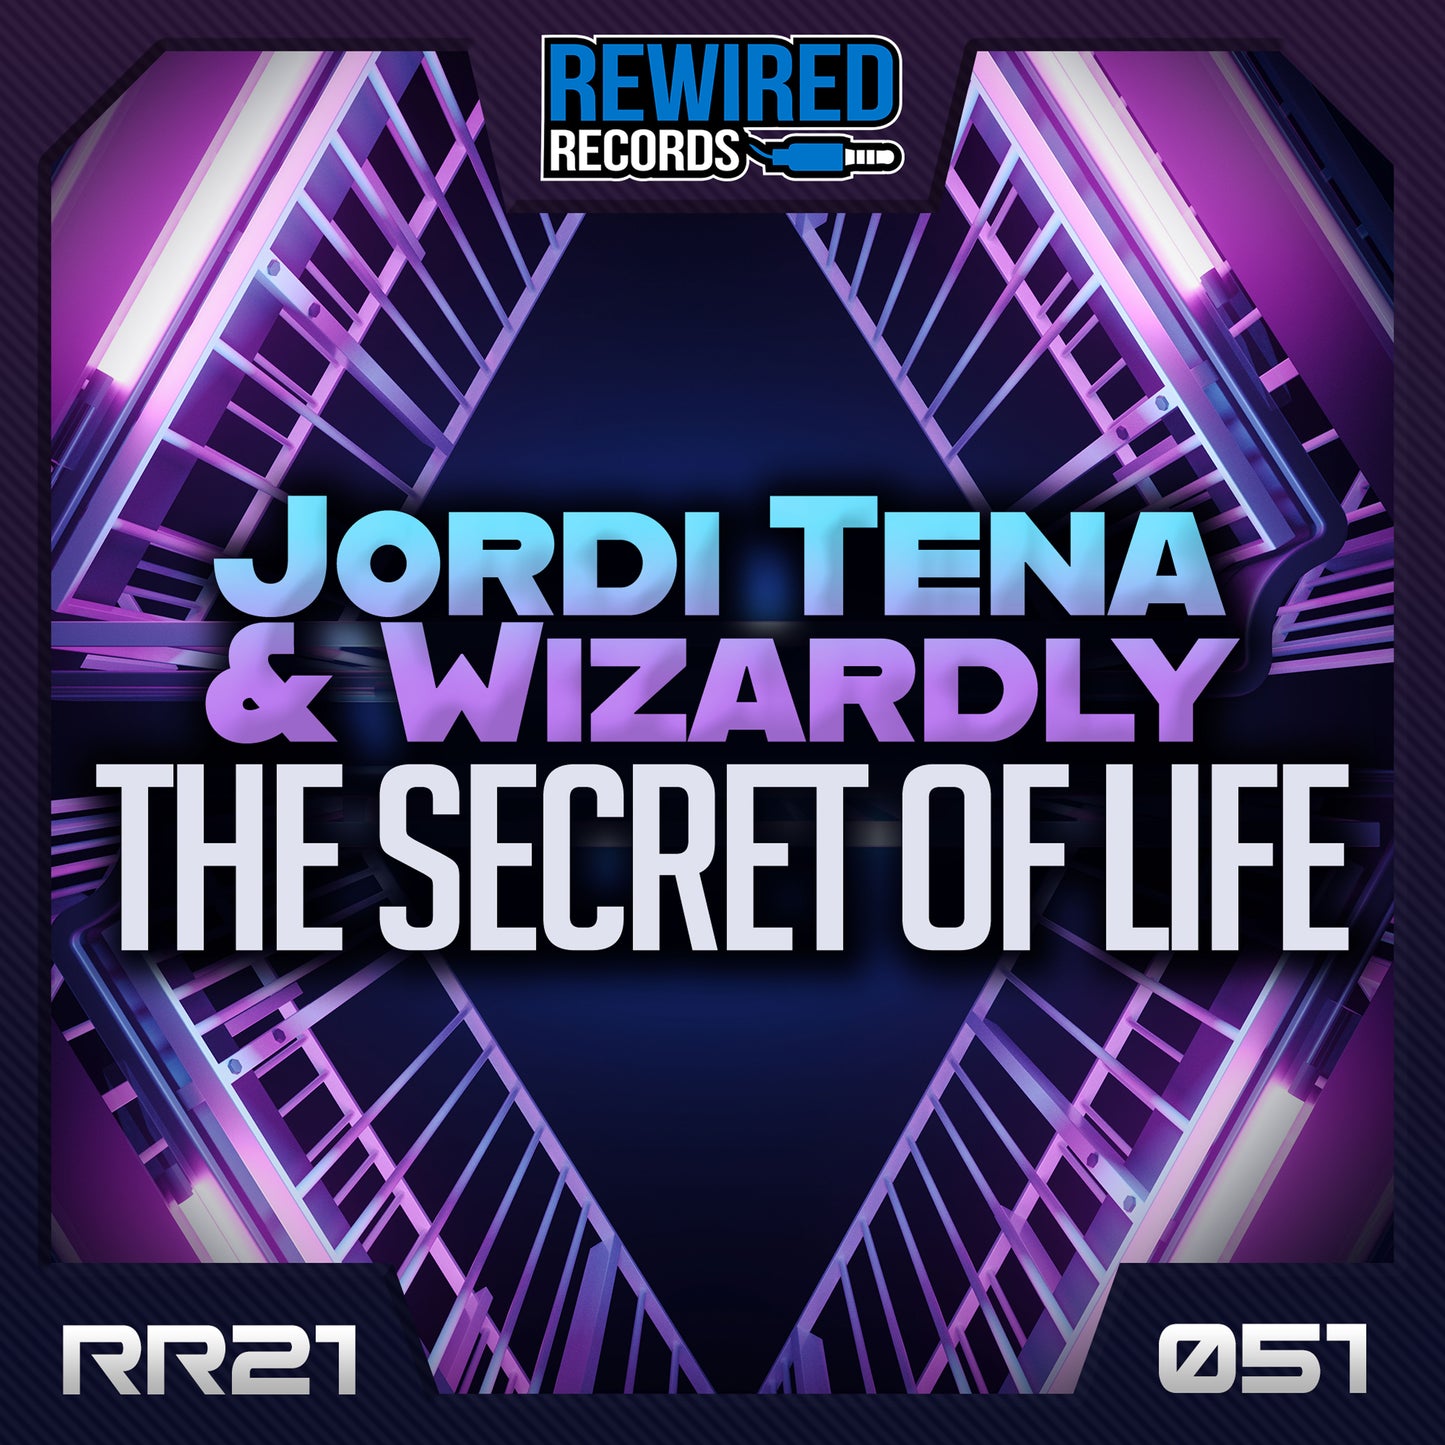 Jordi Tena & Wizardly - The Secret of Life